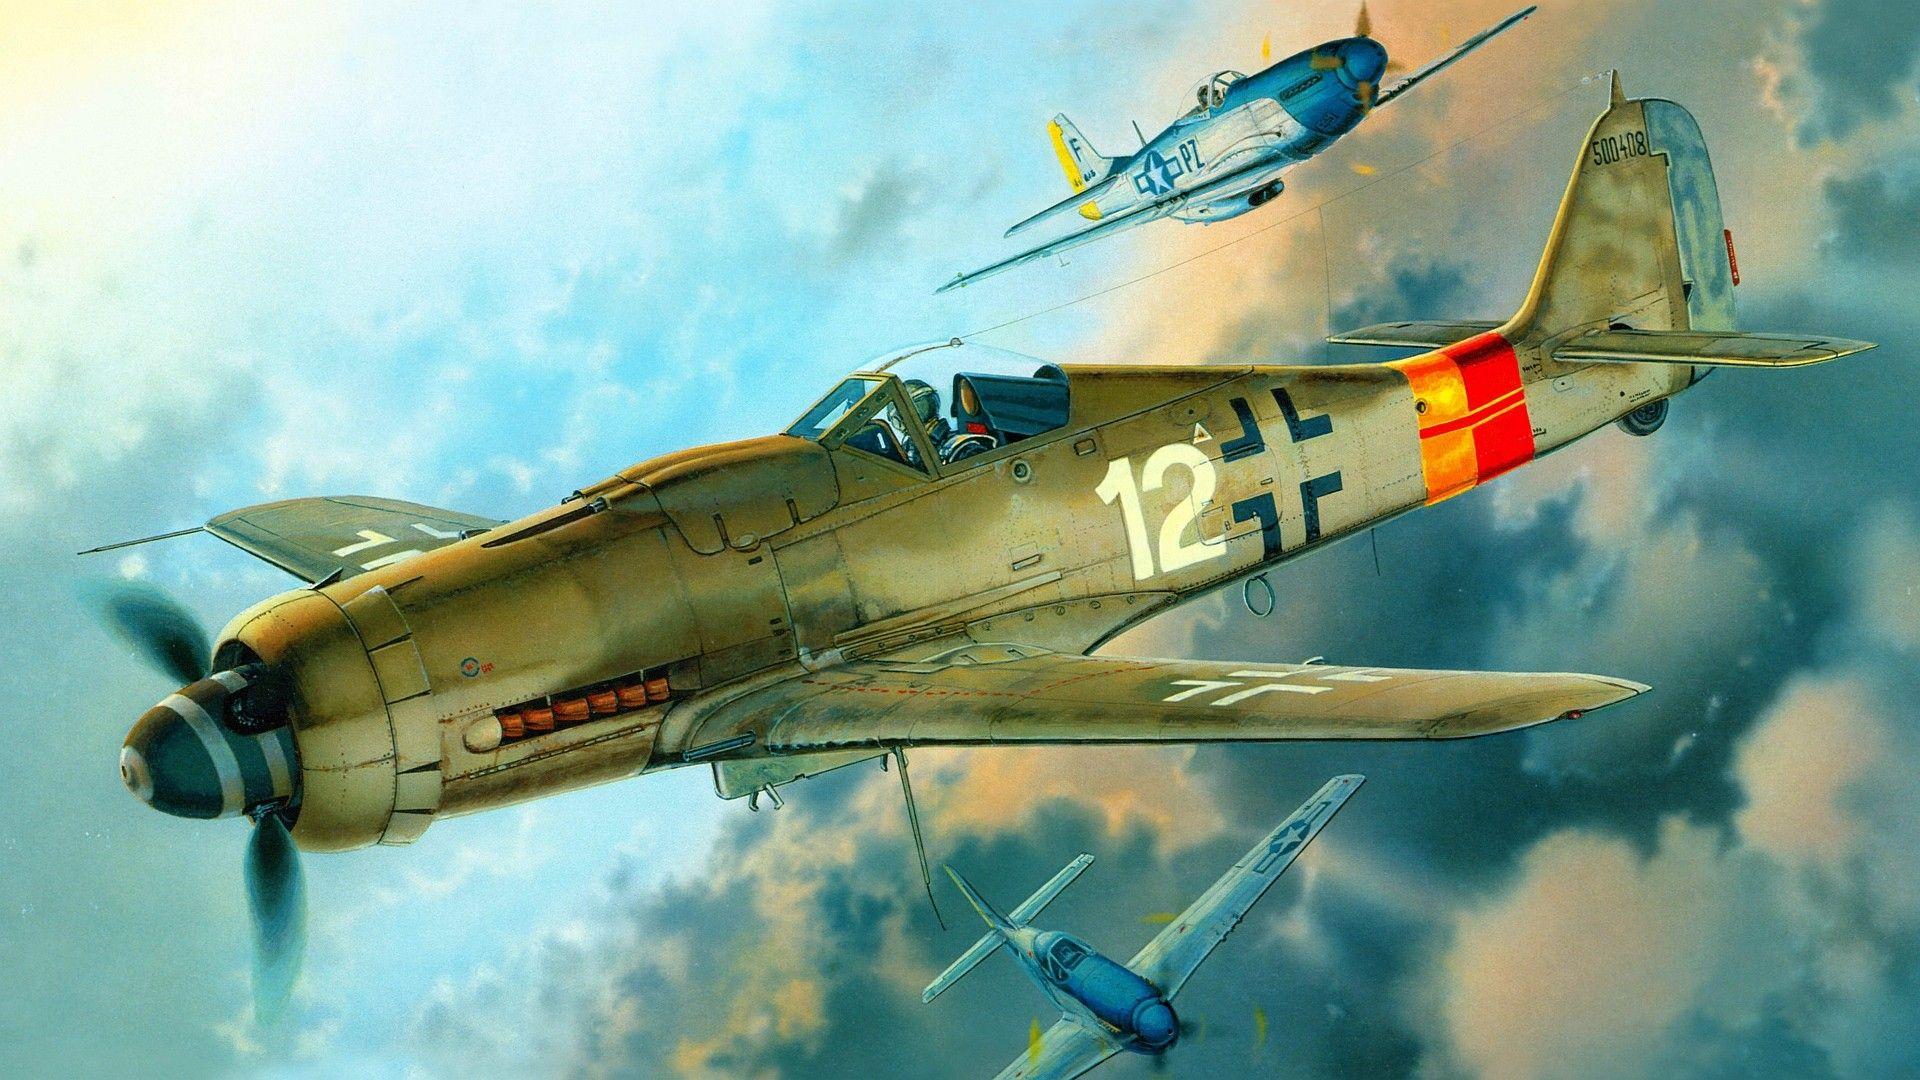 Focke-wulf Fw 190 Wallpapers - Wallpaper Cave 32E